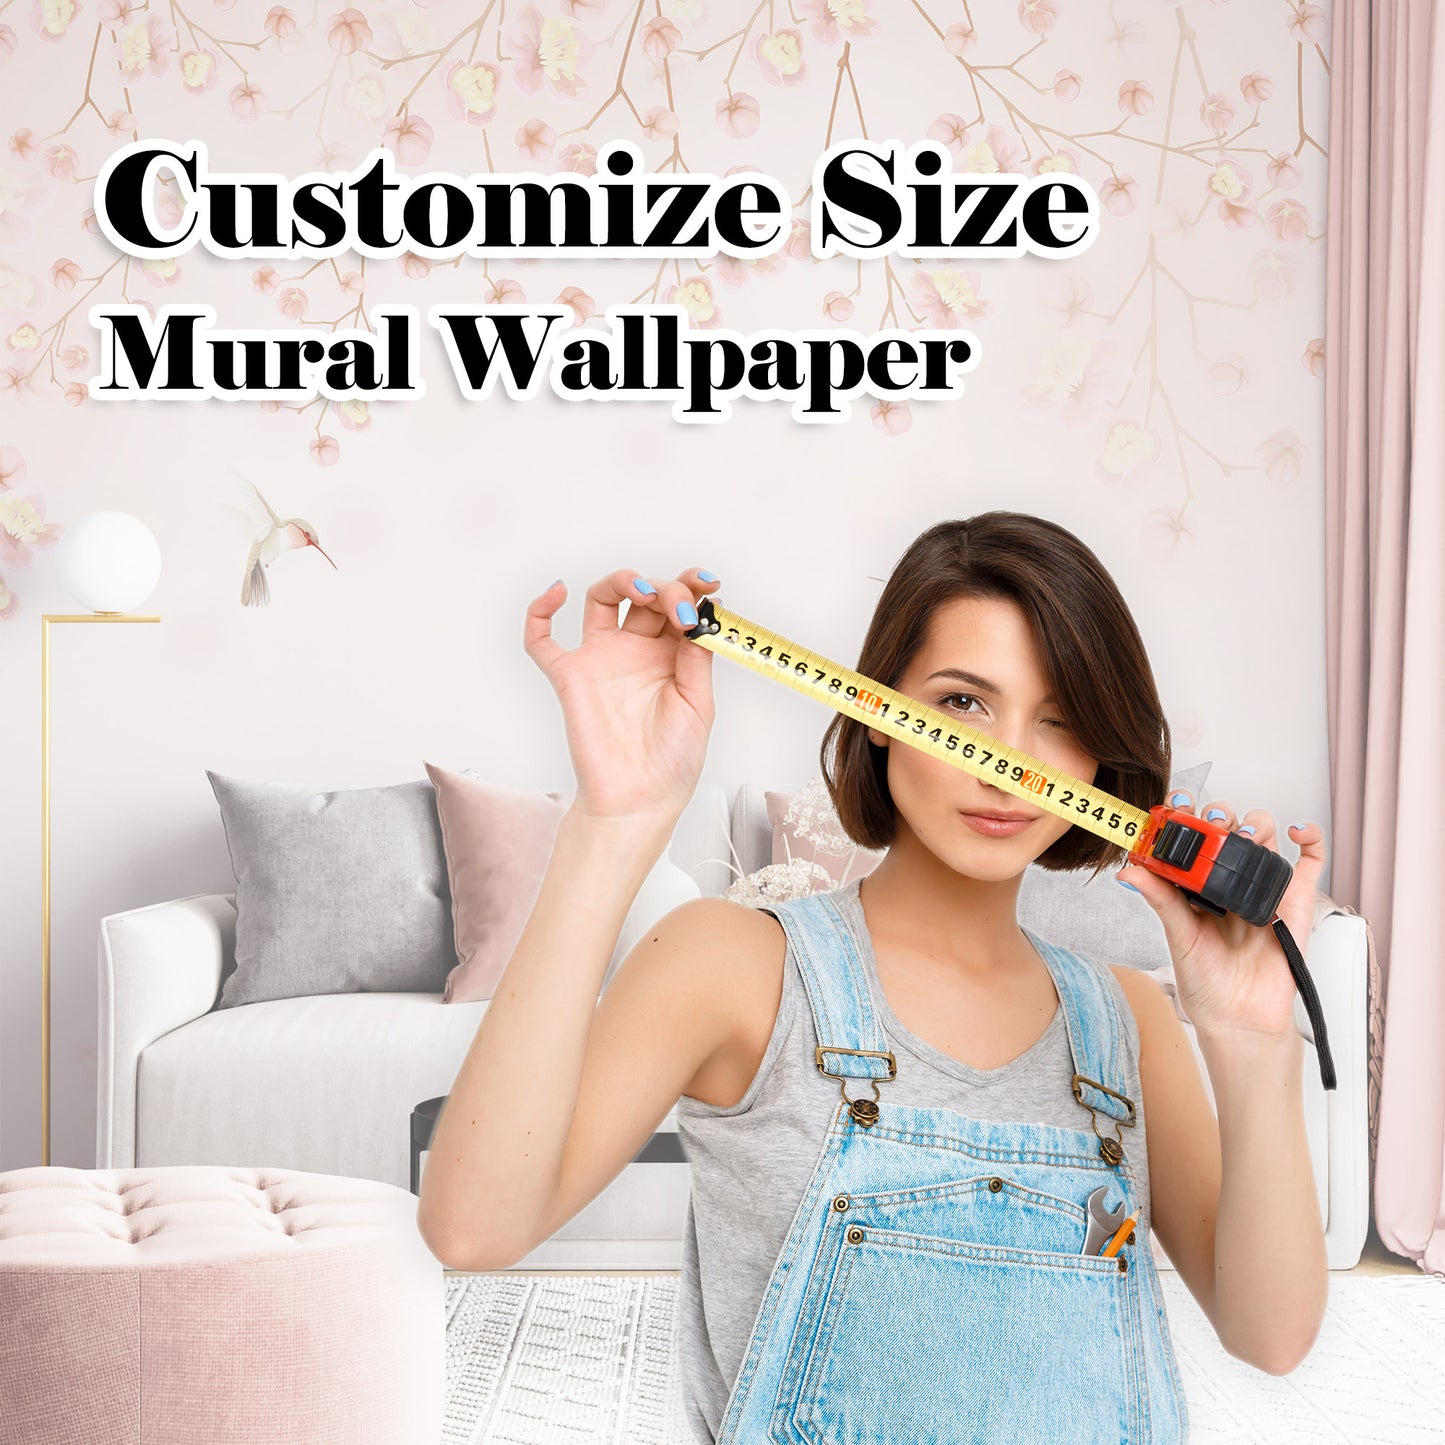 Customize Size Mural Wallpaper